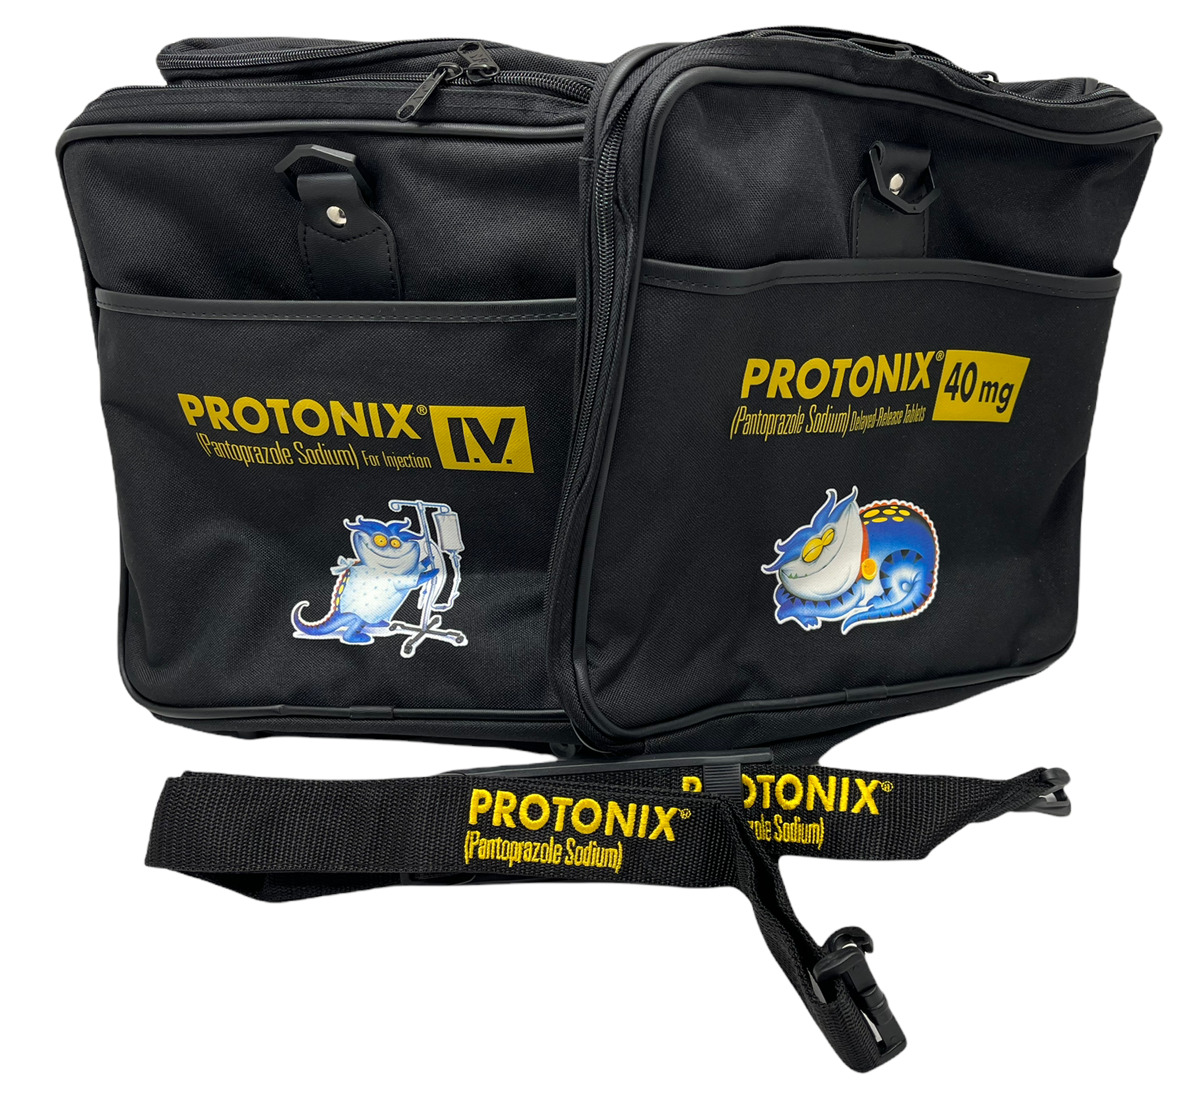 Protonix Pharmacy Drug Rep Large Duffel Travel Bag Luggage Multi Compartment